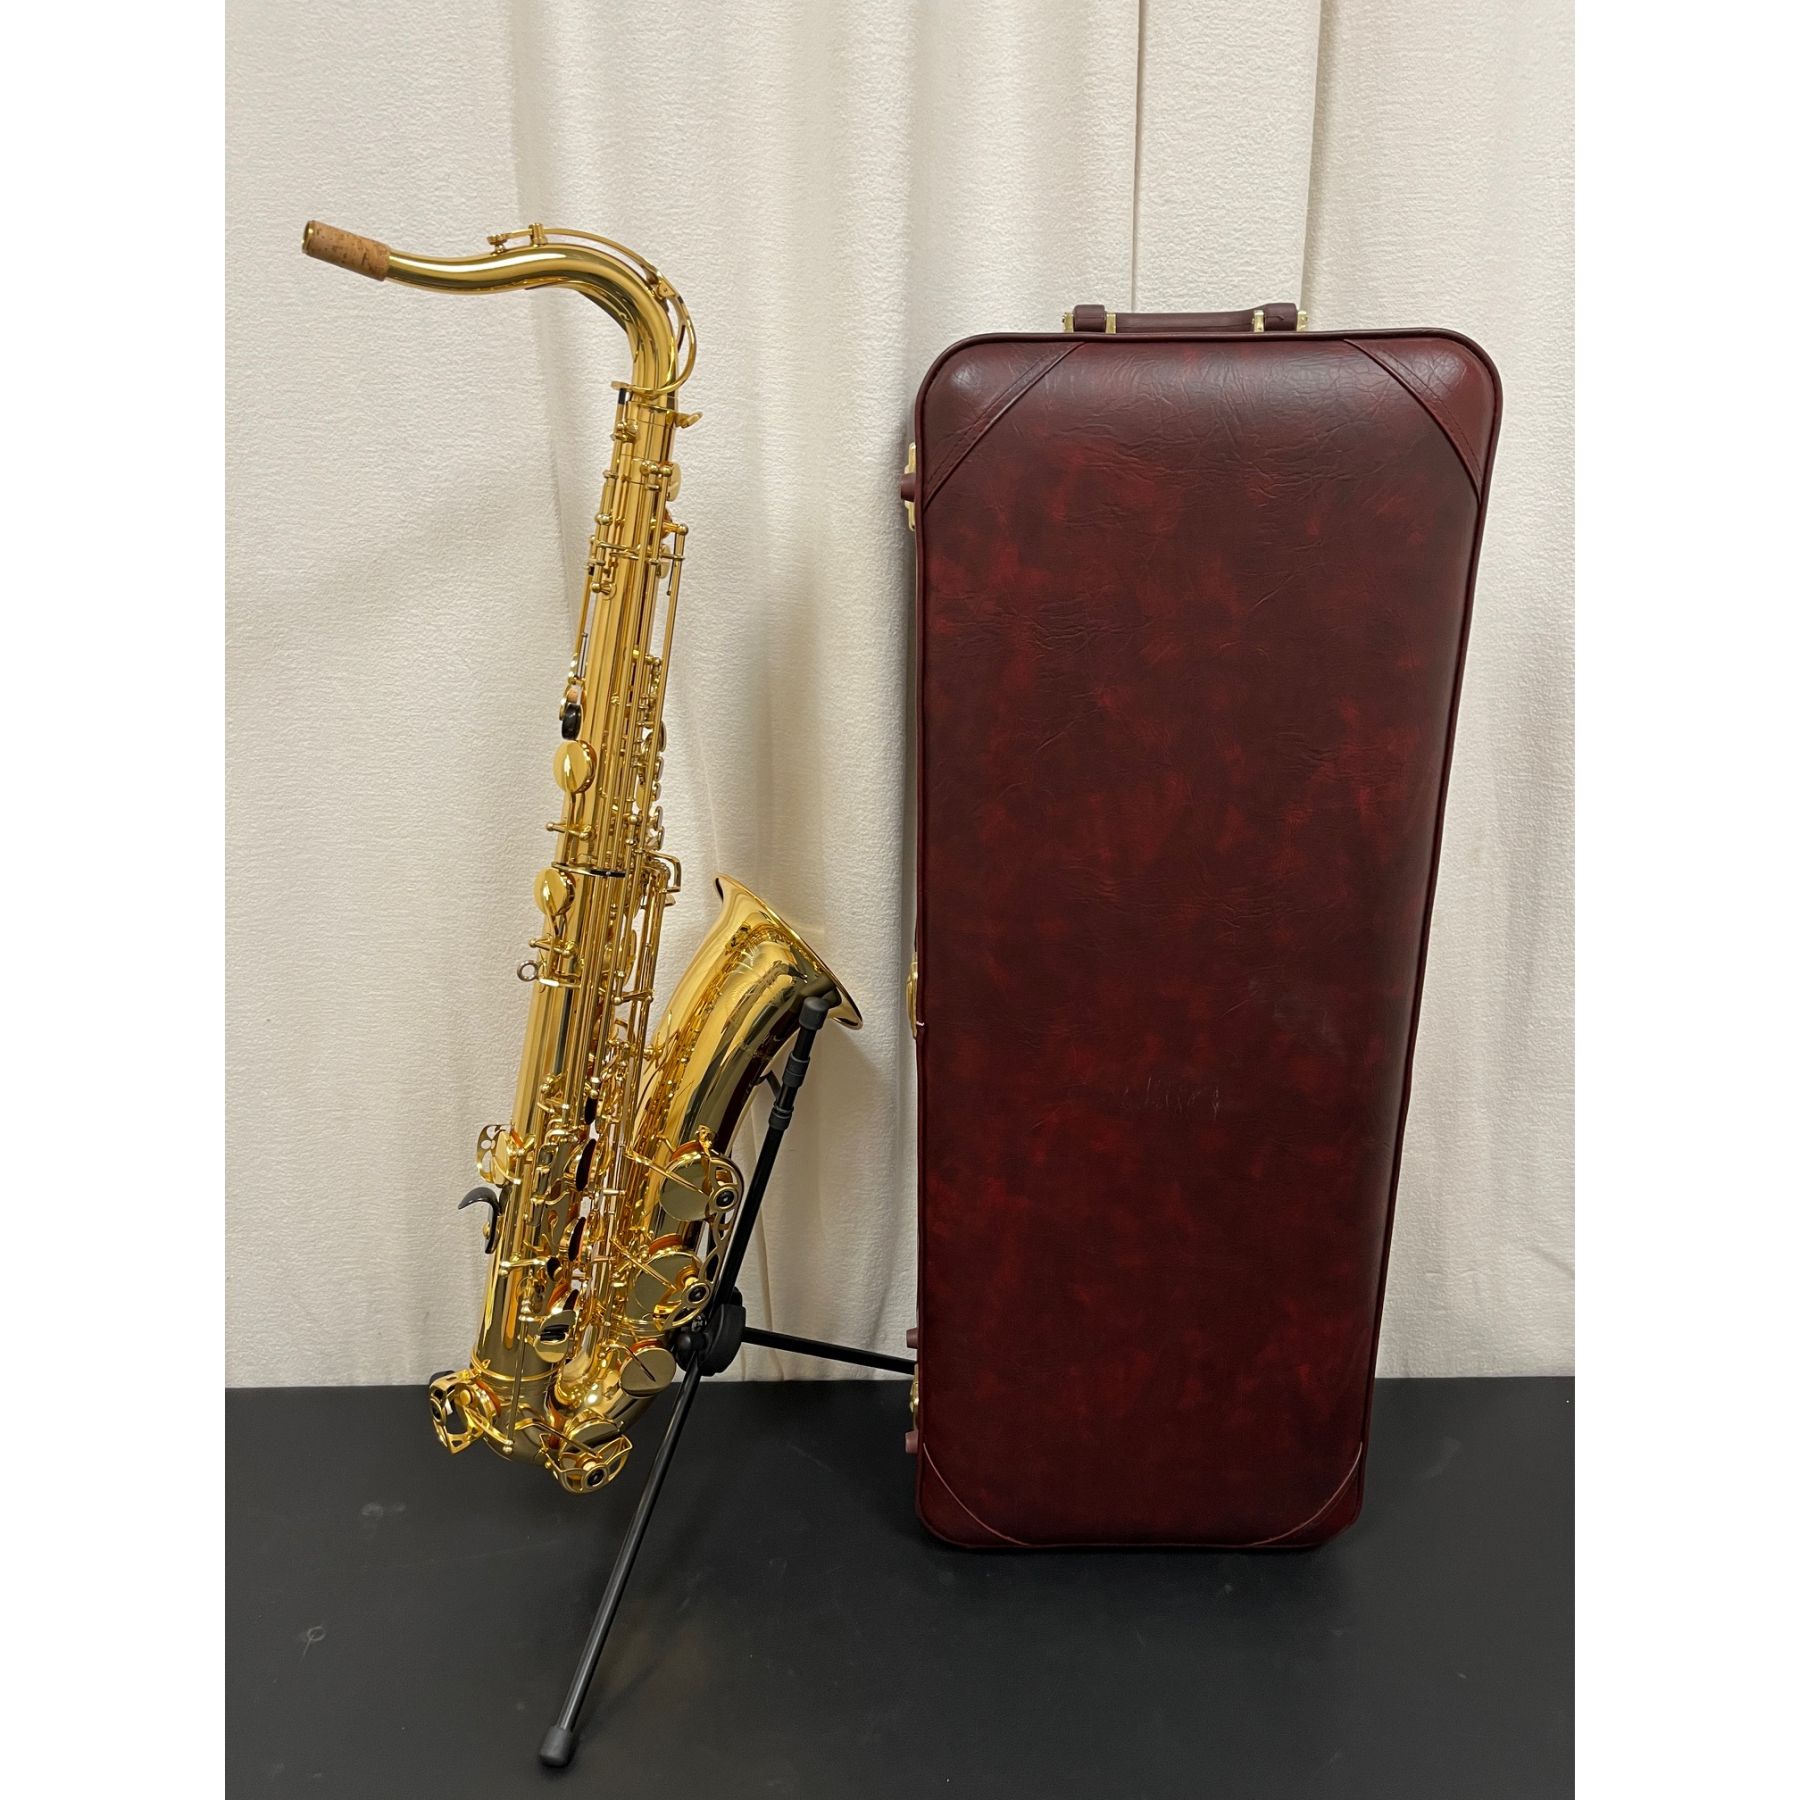 Occasion Tenor-Saxophon-0002.jpg